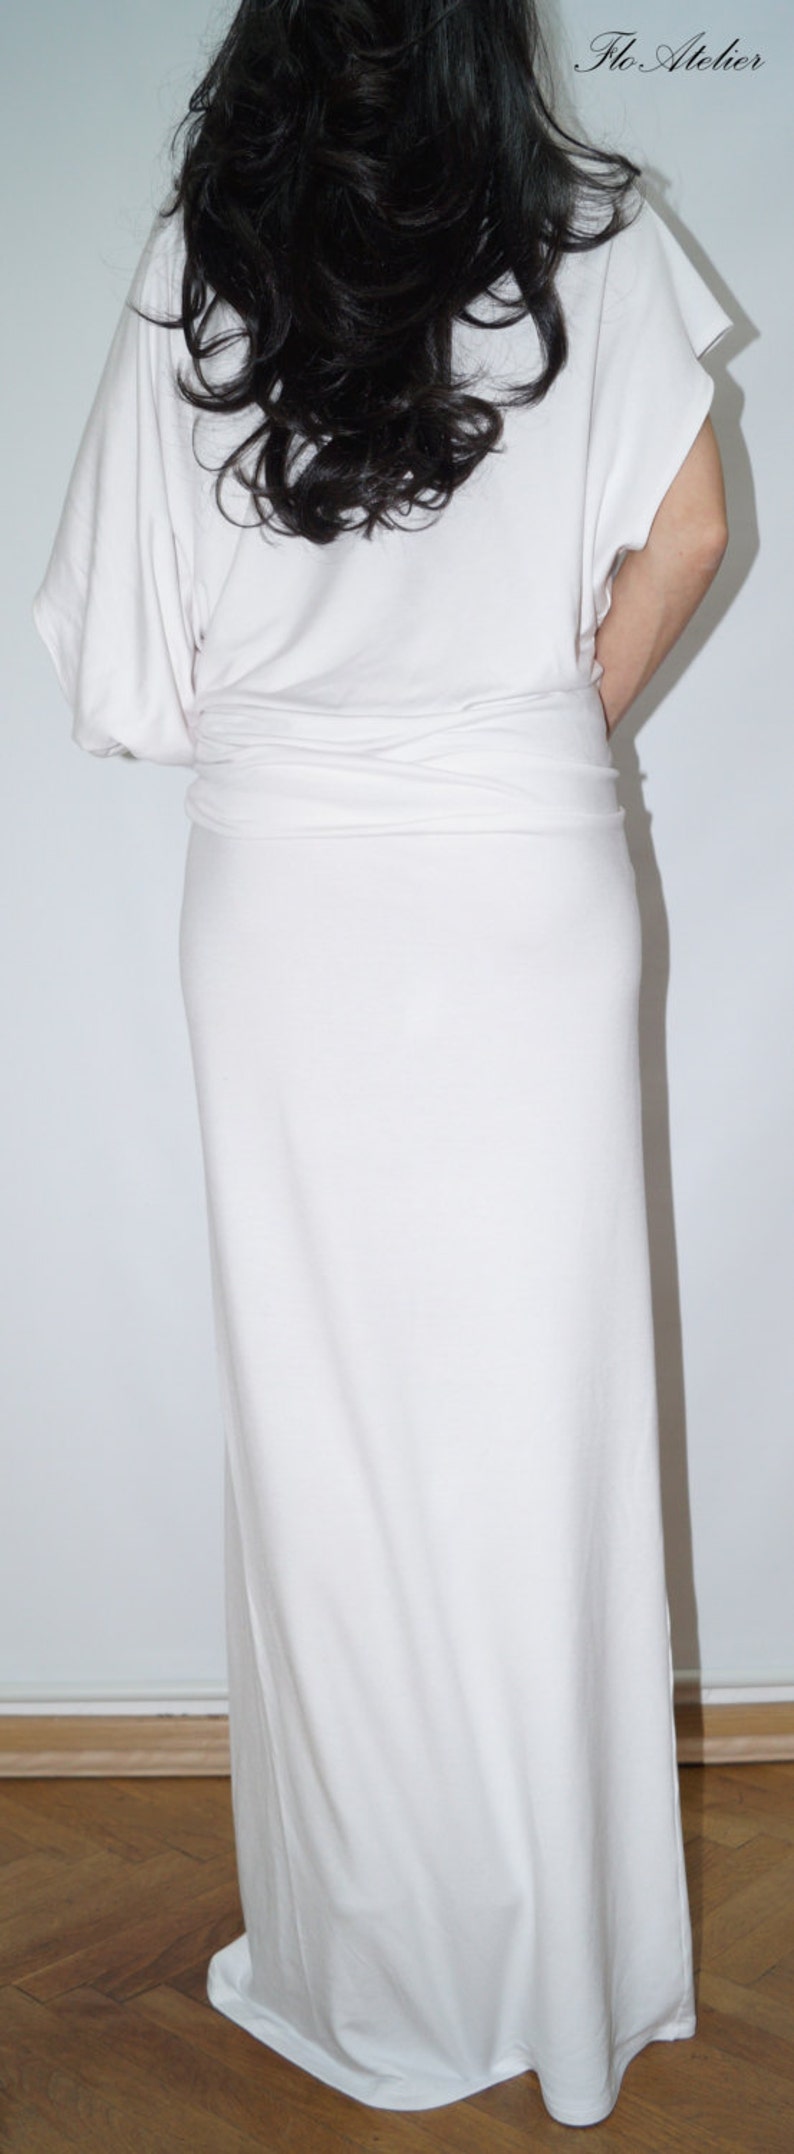 Maxi Dress/Asymmetrical Maxi Tunic/Handmade White Kaftan/White Summer Dress/Top/Cotton Dress/White Tunic/White Dress/White Casual Top/F1114 image 3